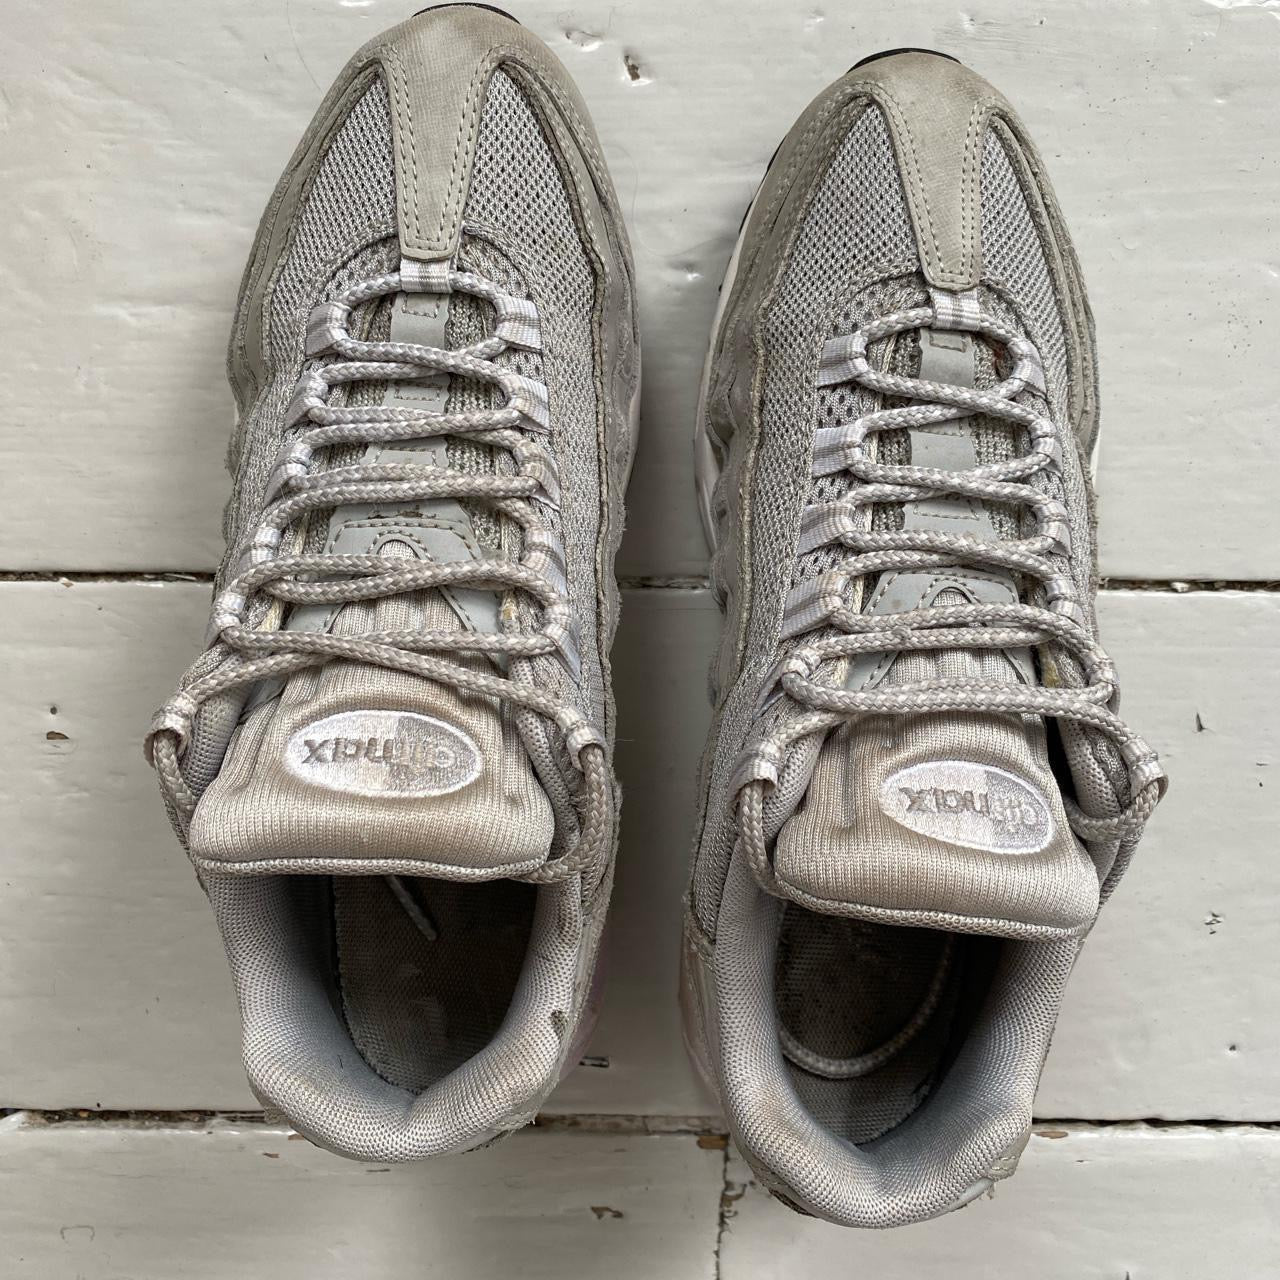 Nike Air Max 95 Grey and White (UK 6)